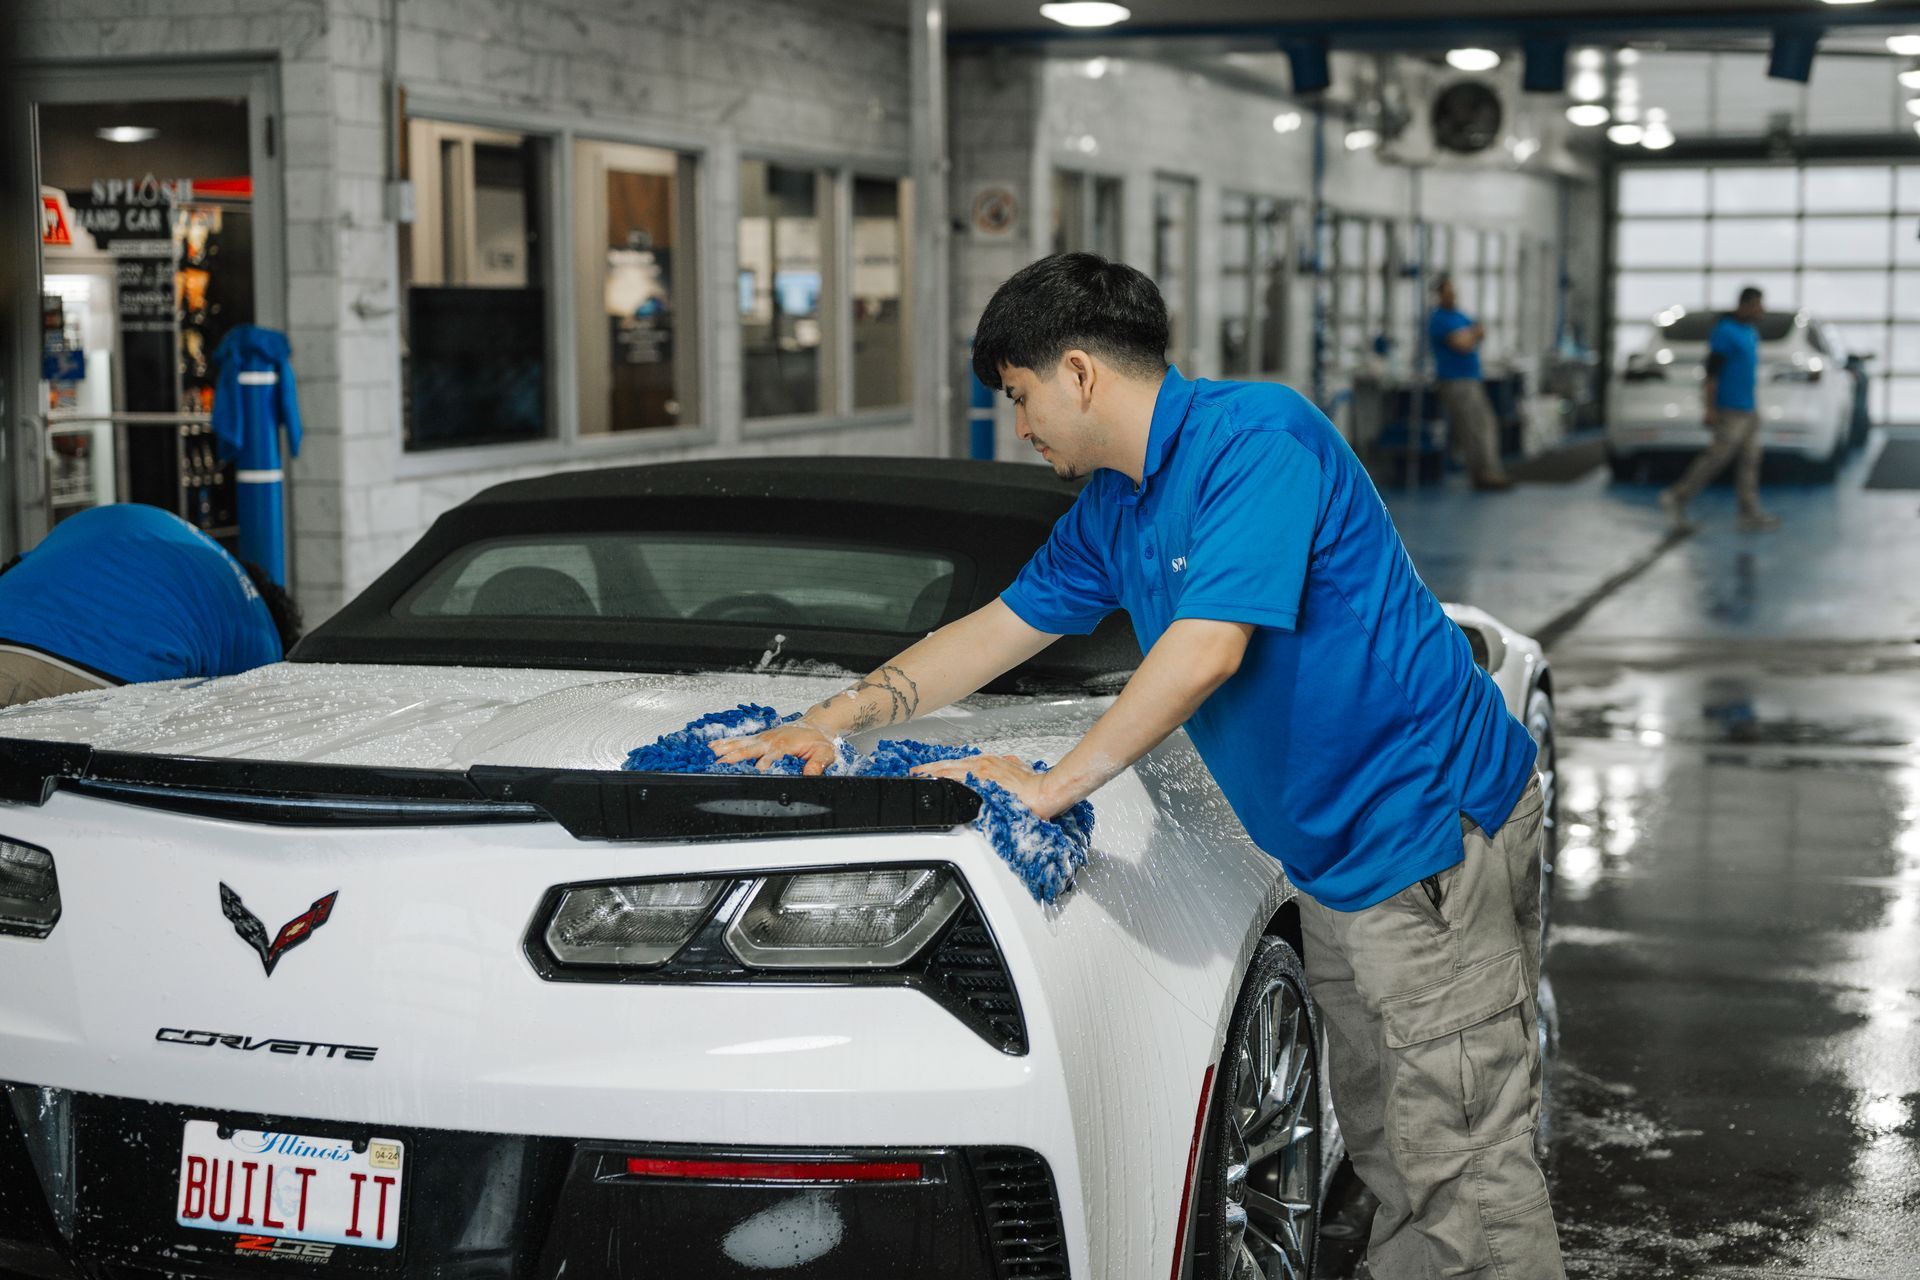 A man in a blue shirt is washing a white sports car.